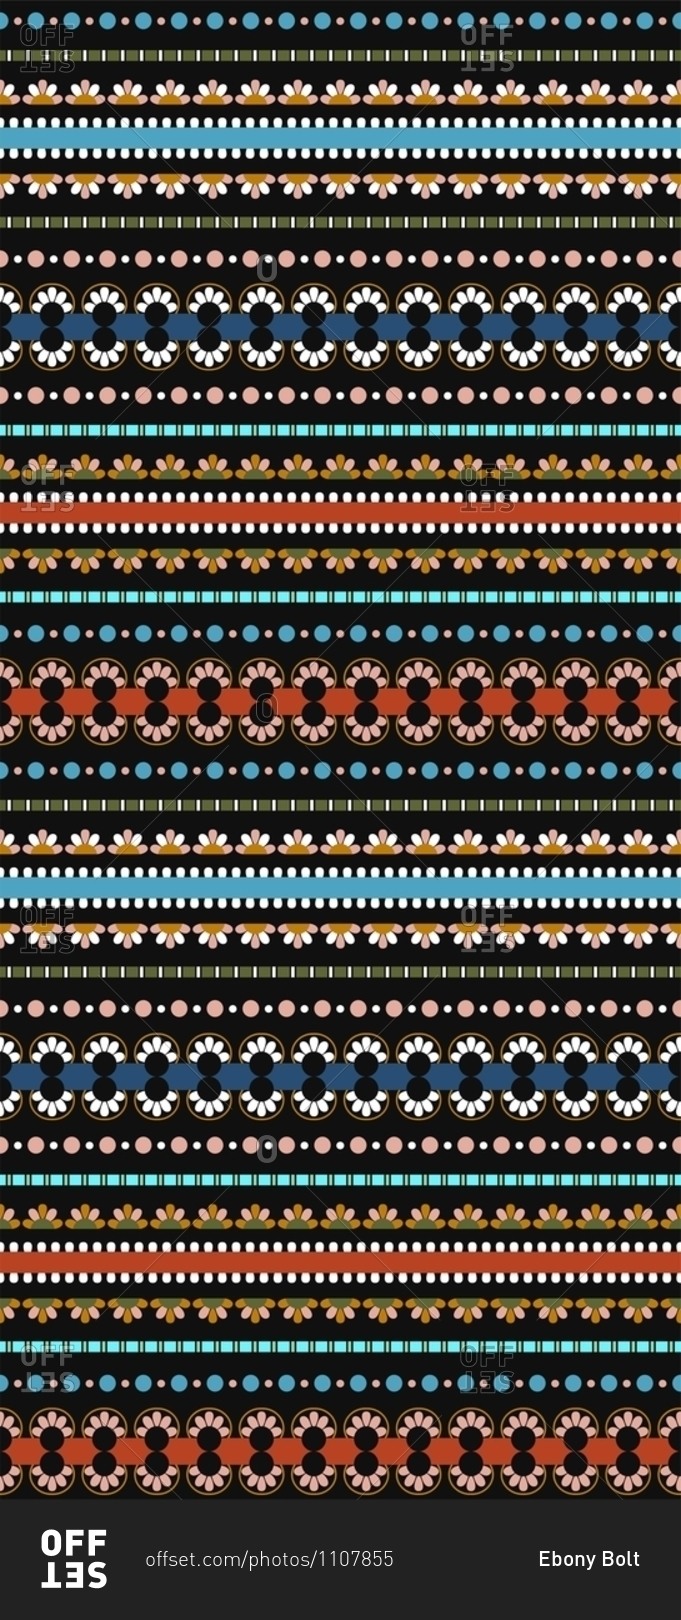 Multi colored horizontal stripe pattern stock photo -\
OFFSET